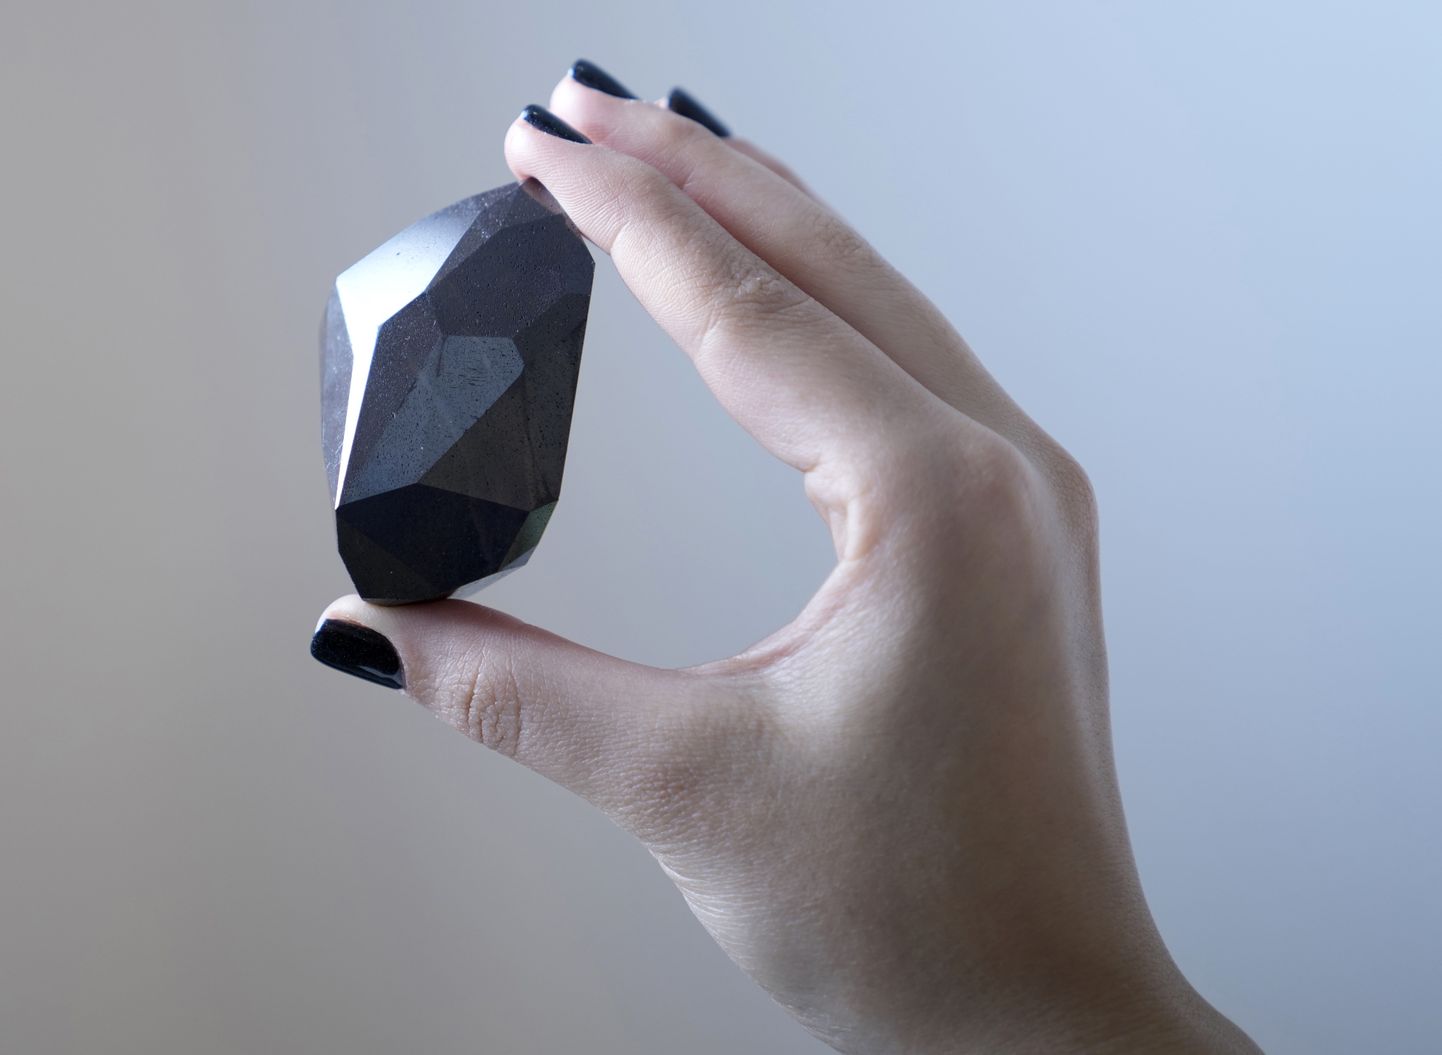 Sotheby'se oksjonimaja Dubai esindaja näitas musta värvi teemanti